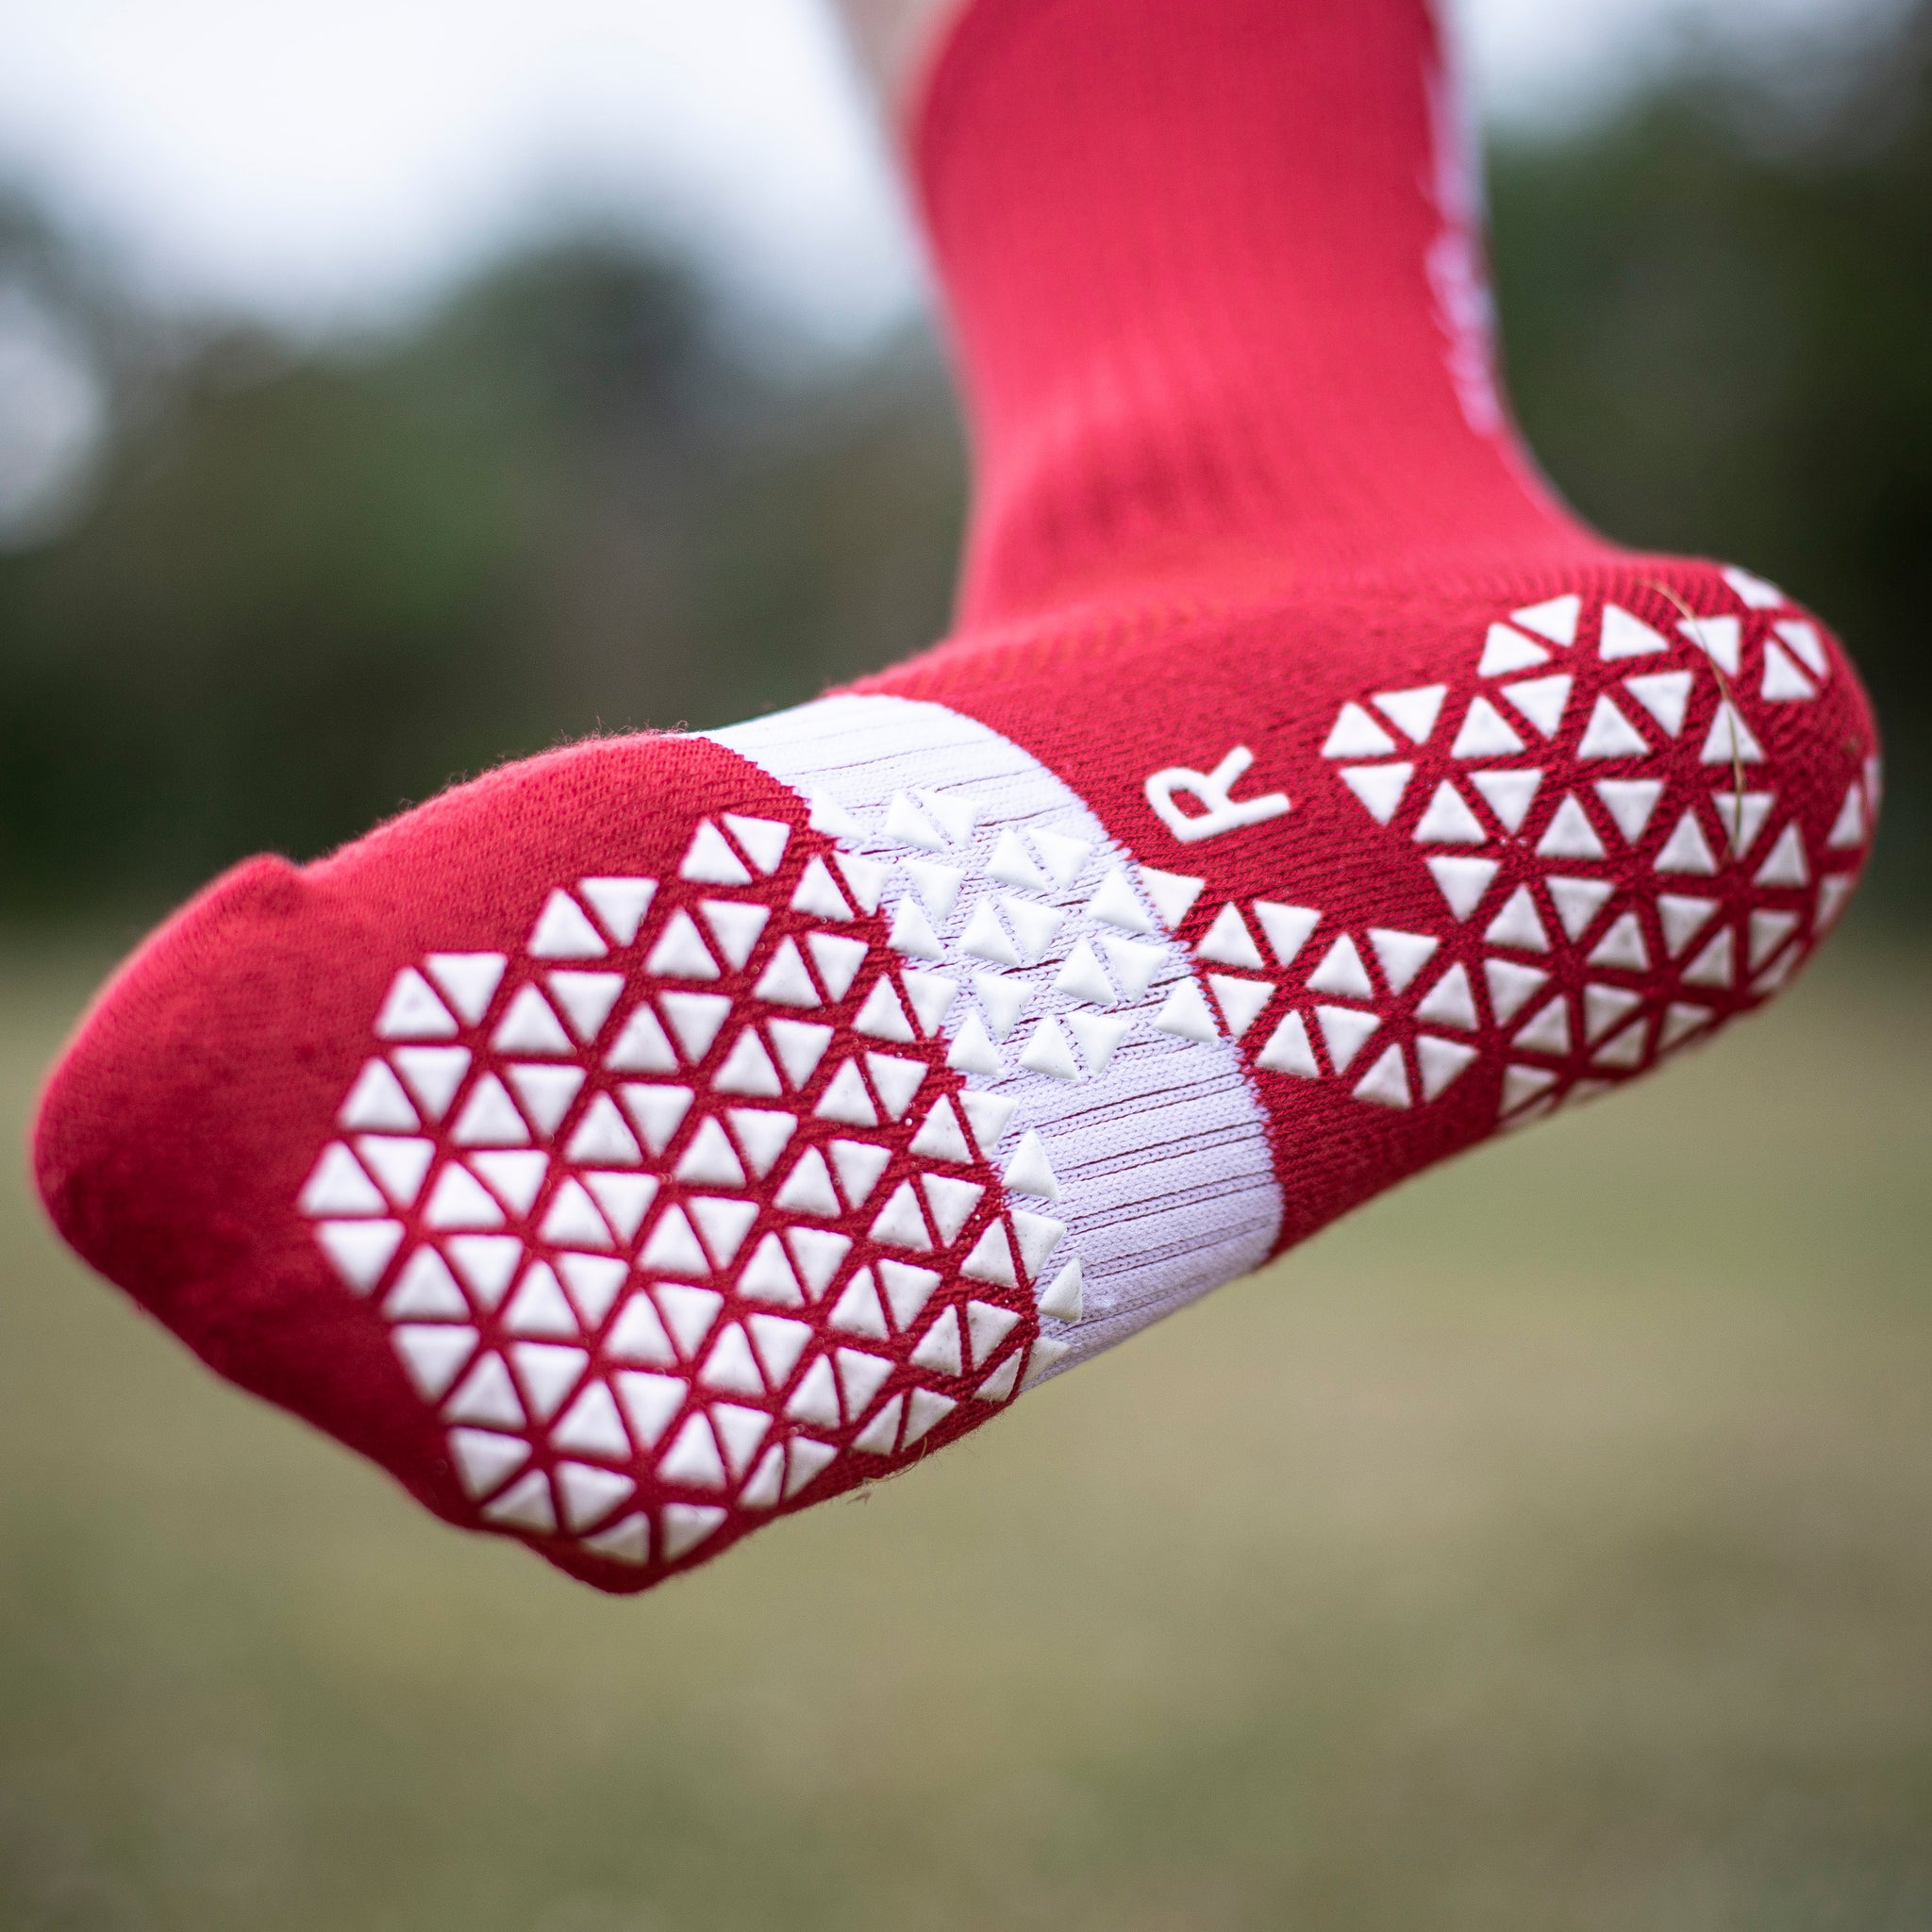 Pure Grip Socks Pro Maroon Small (3 - 6.5 US)